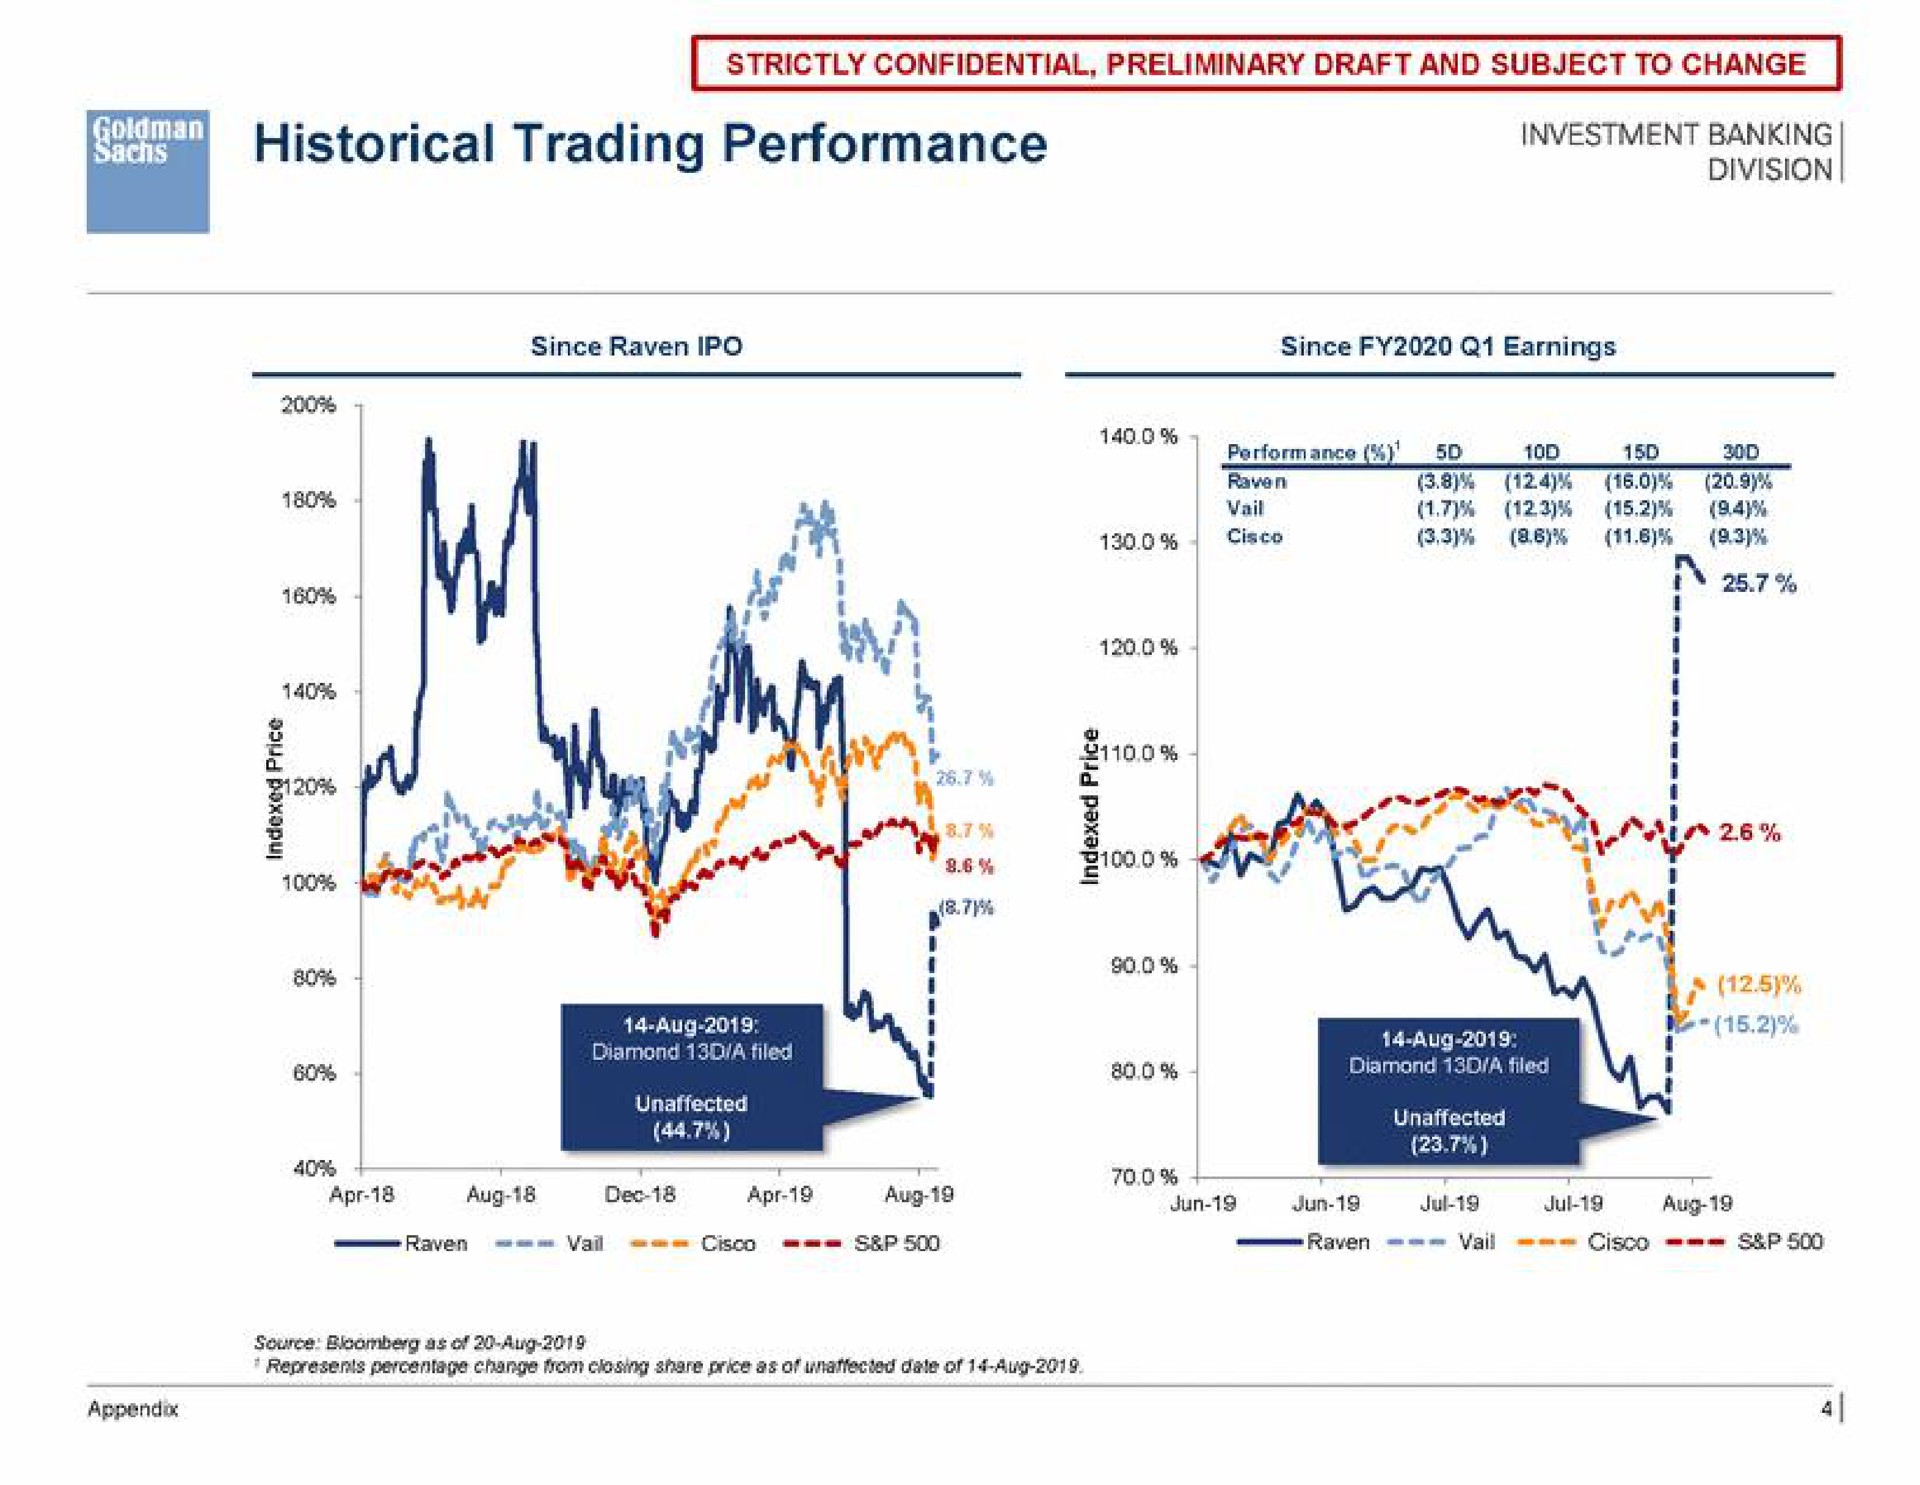 historical trading performance division | Goldman Sachs